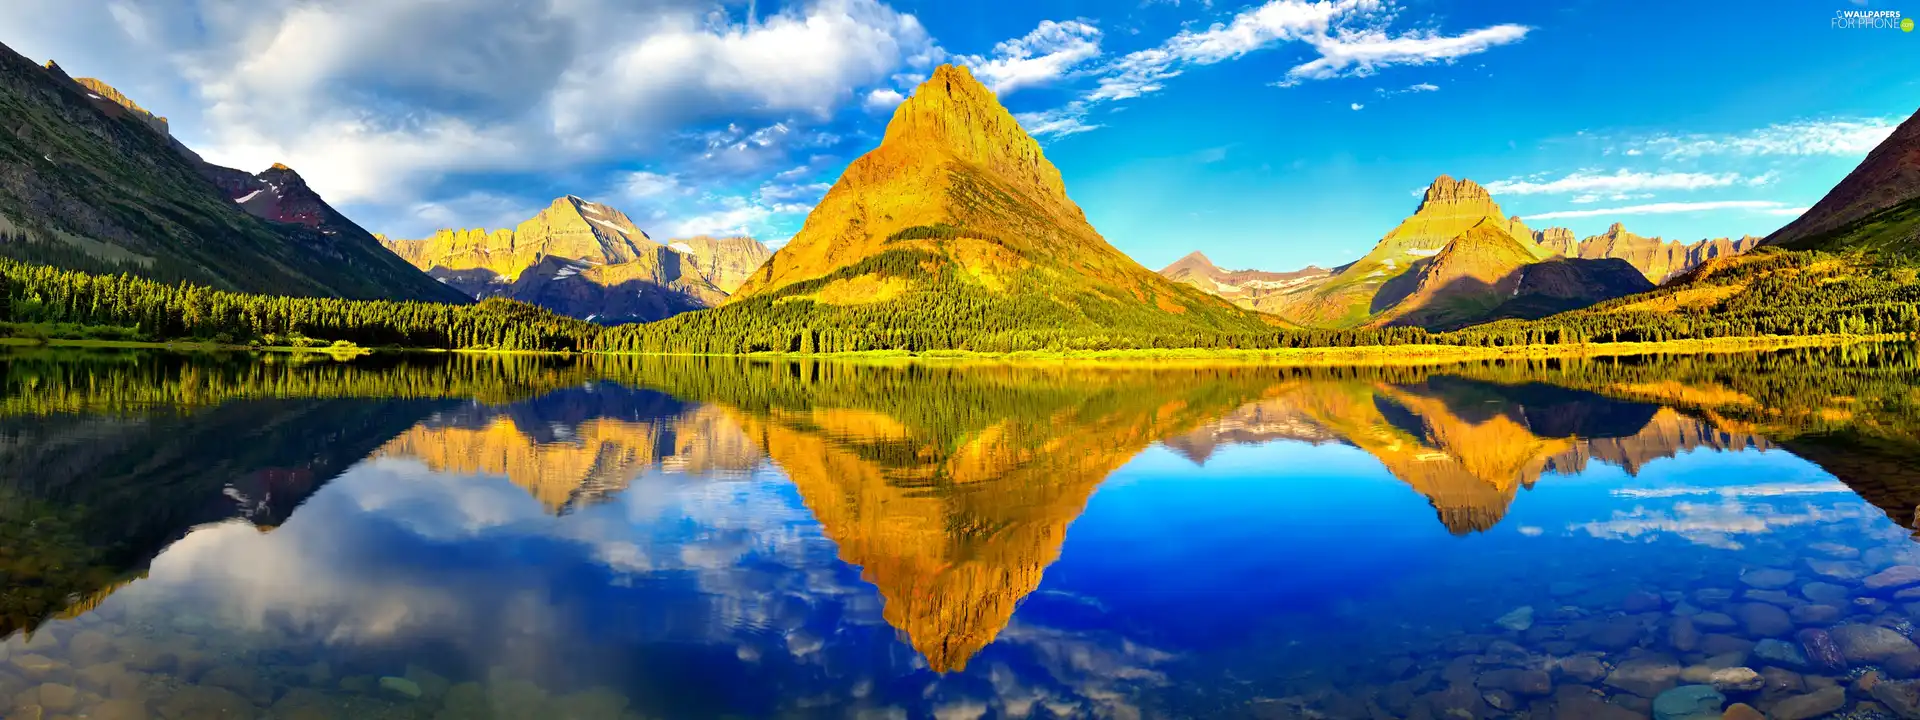 lake, reflection, Sky, Mountains, blue